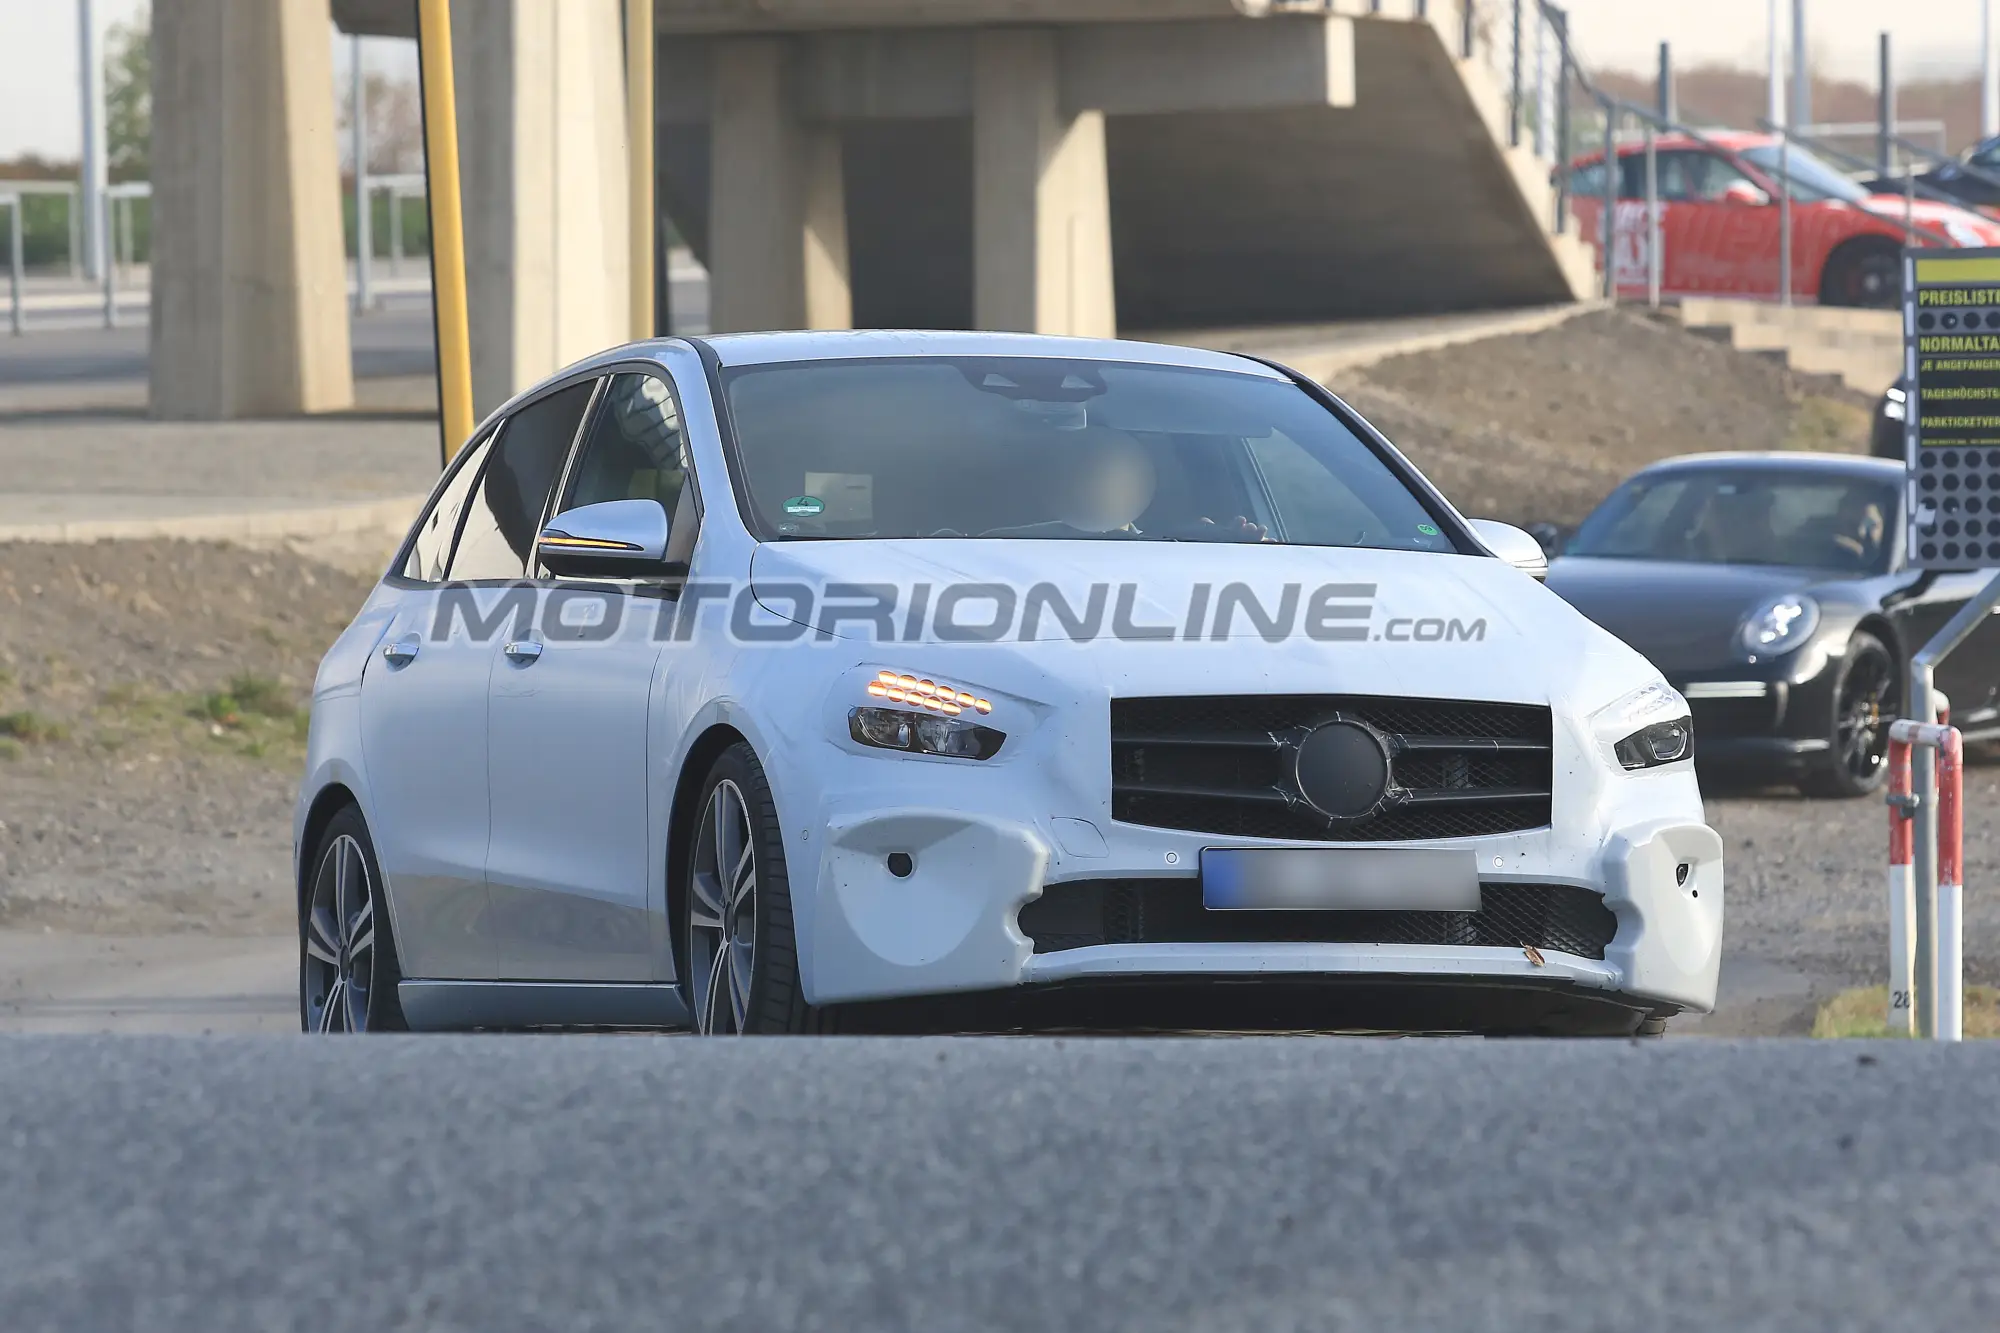 Mercedes Classe B foto spia 6 settembre 2018 - 11